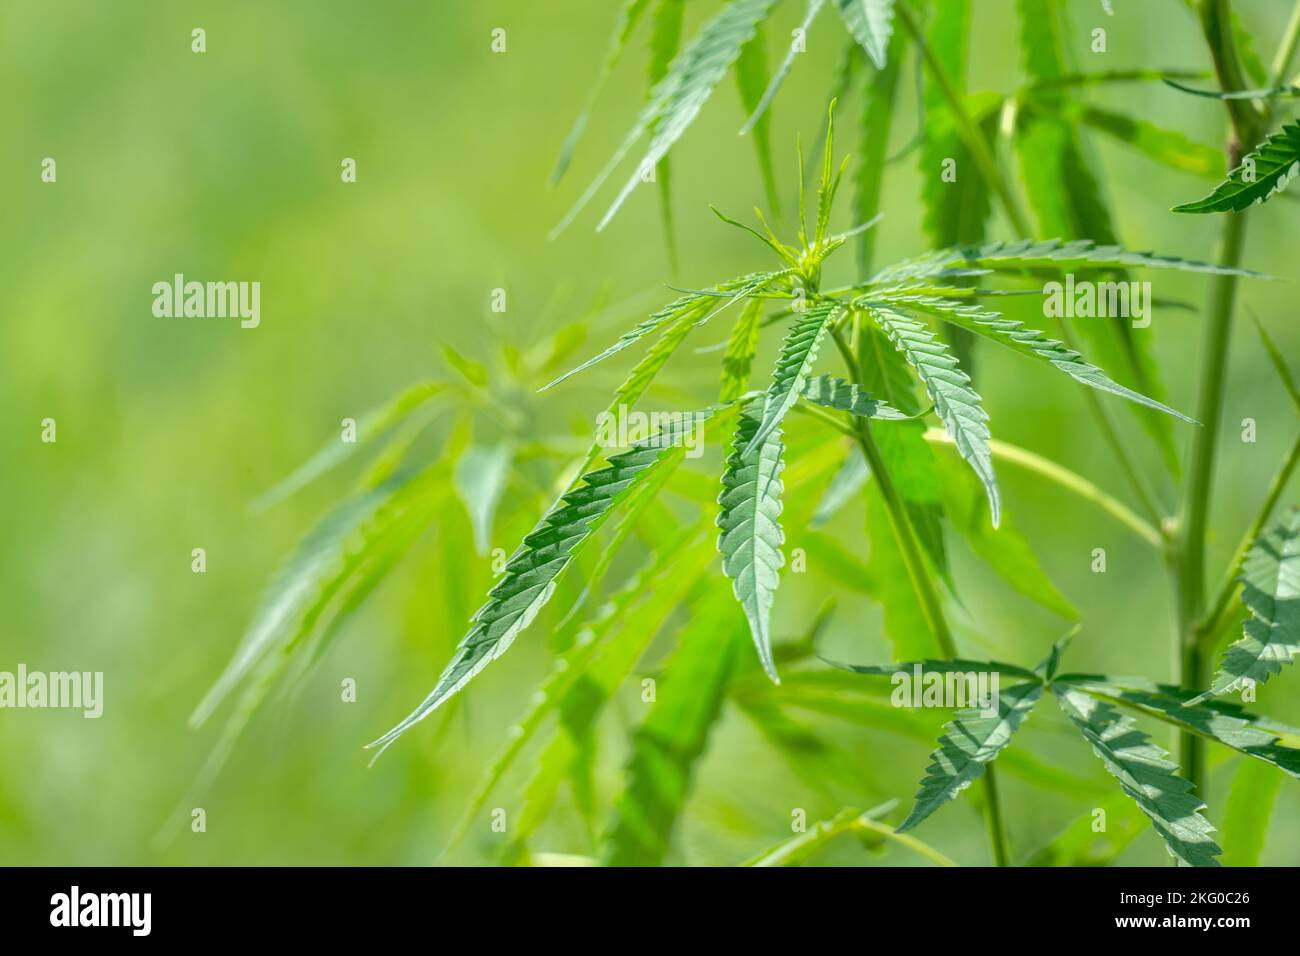 Industrial hemp (cannabis sativa ) plant growing in farm for CBD oil and hemp seed oil extract. Stock Photo